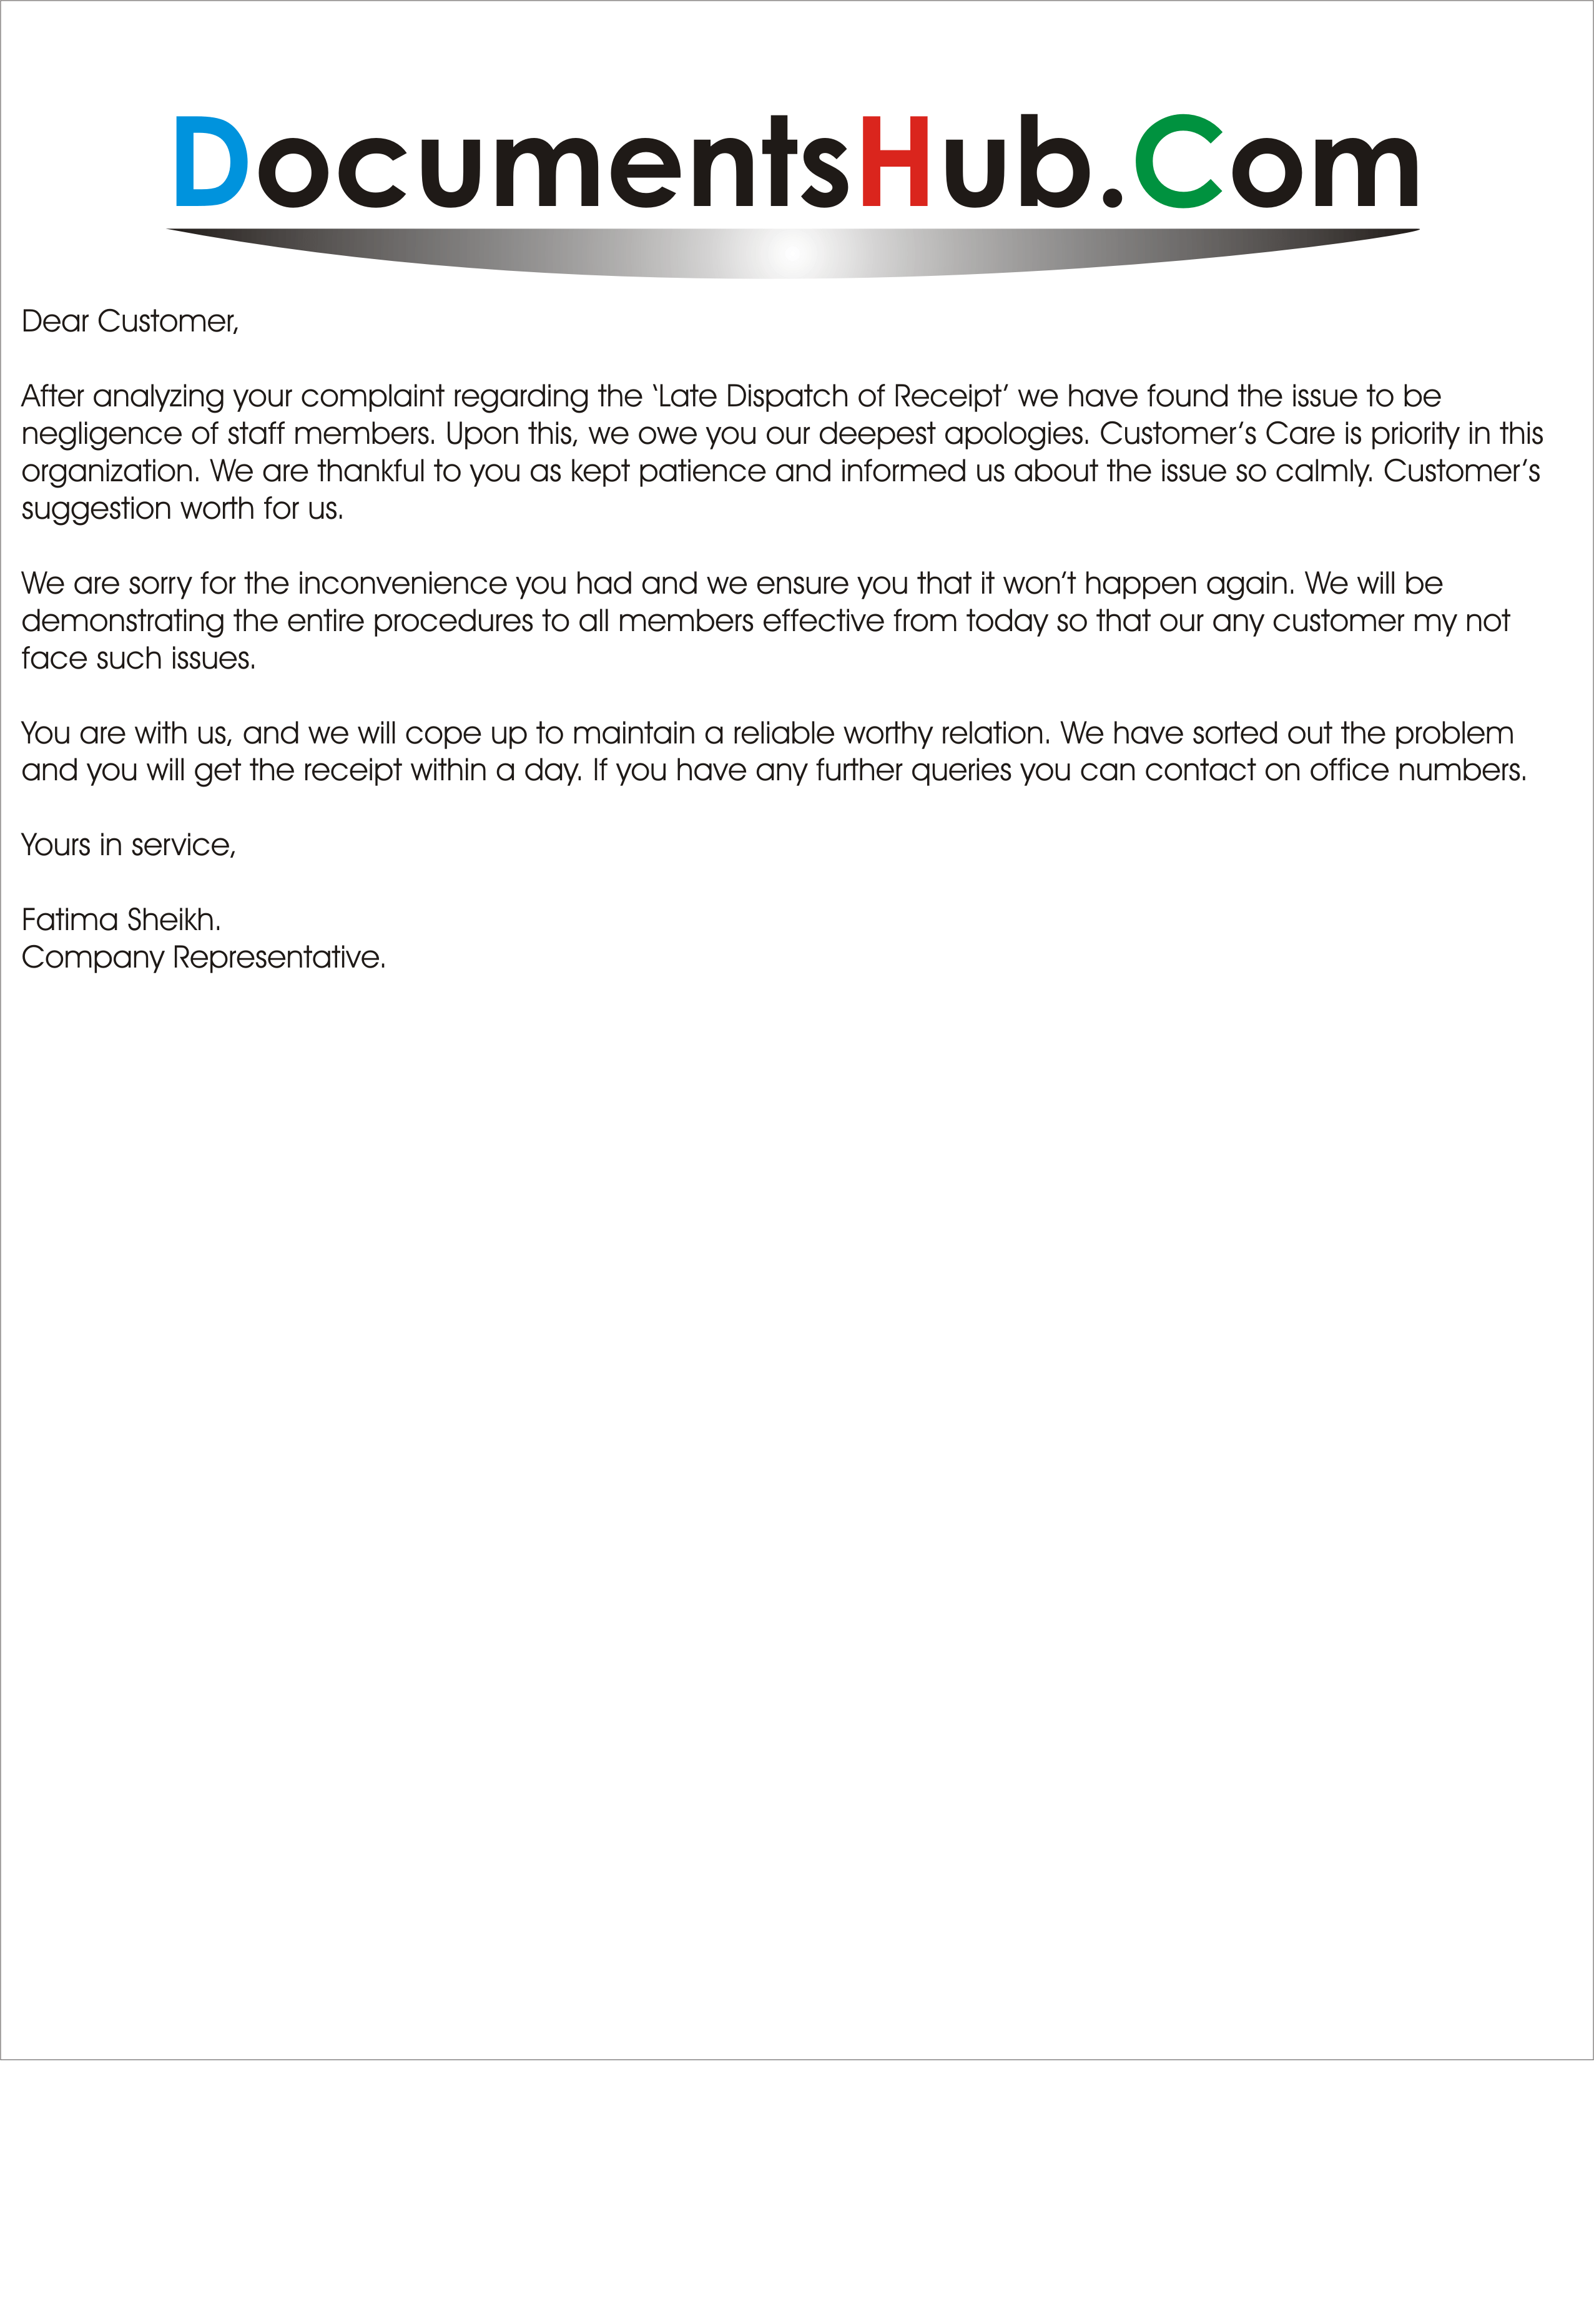 apology letter to customer Muck.greenidesign.co